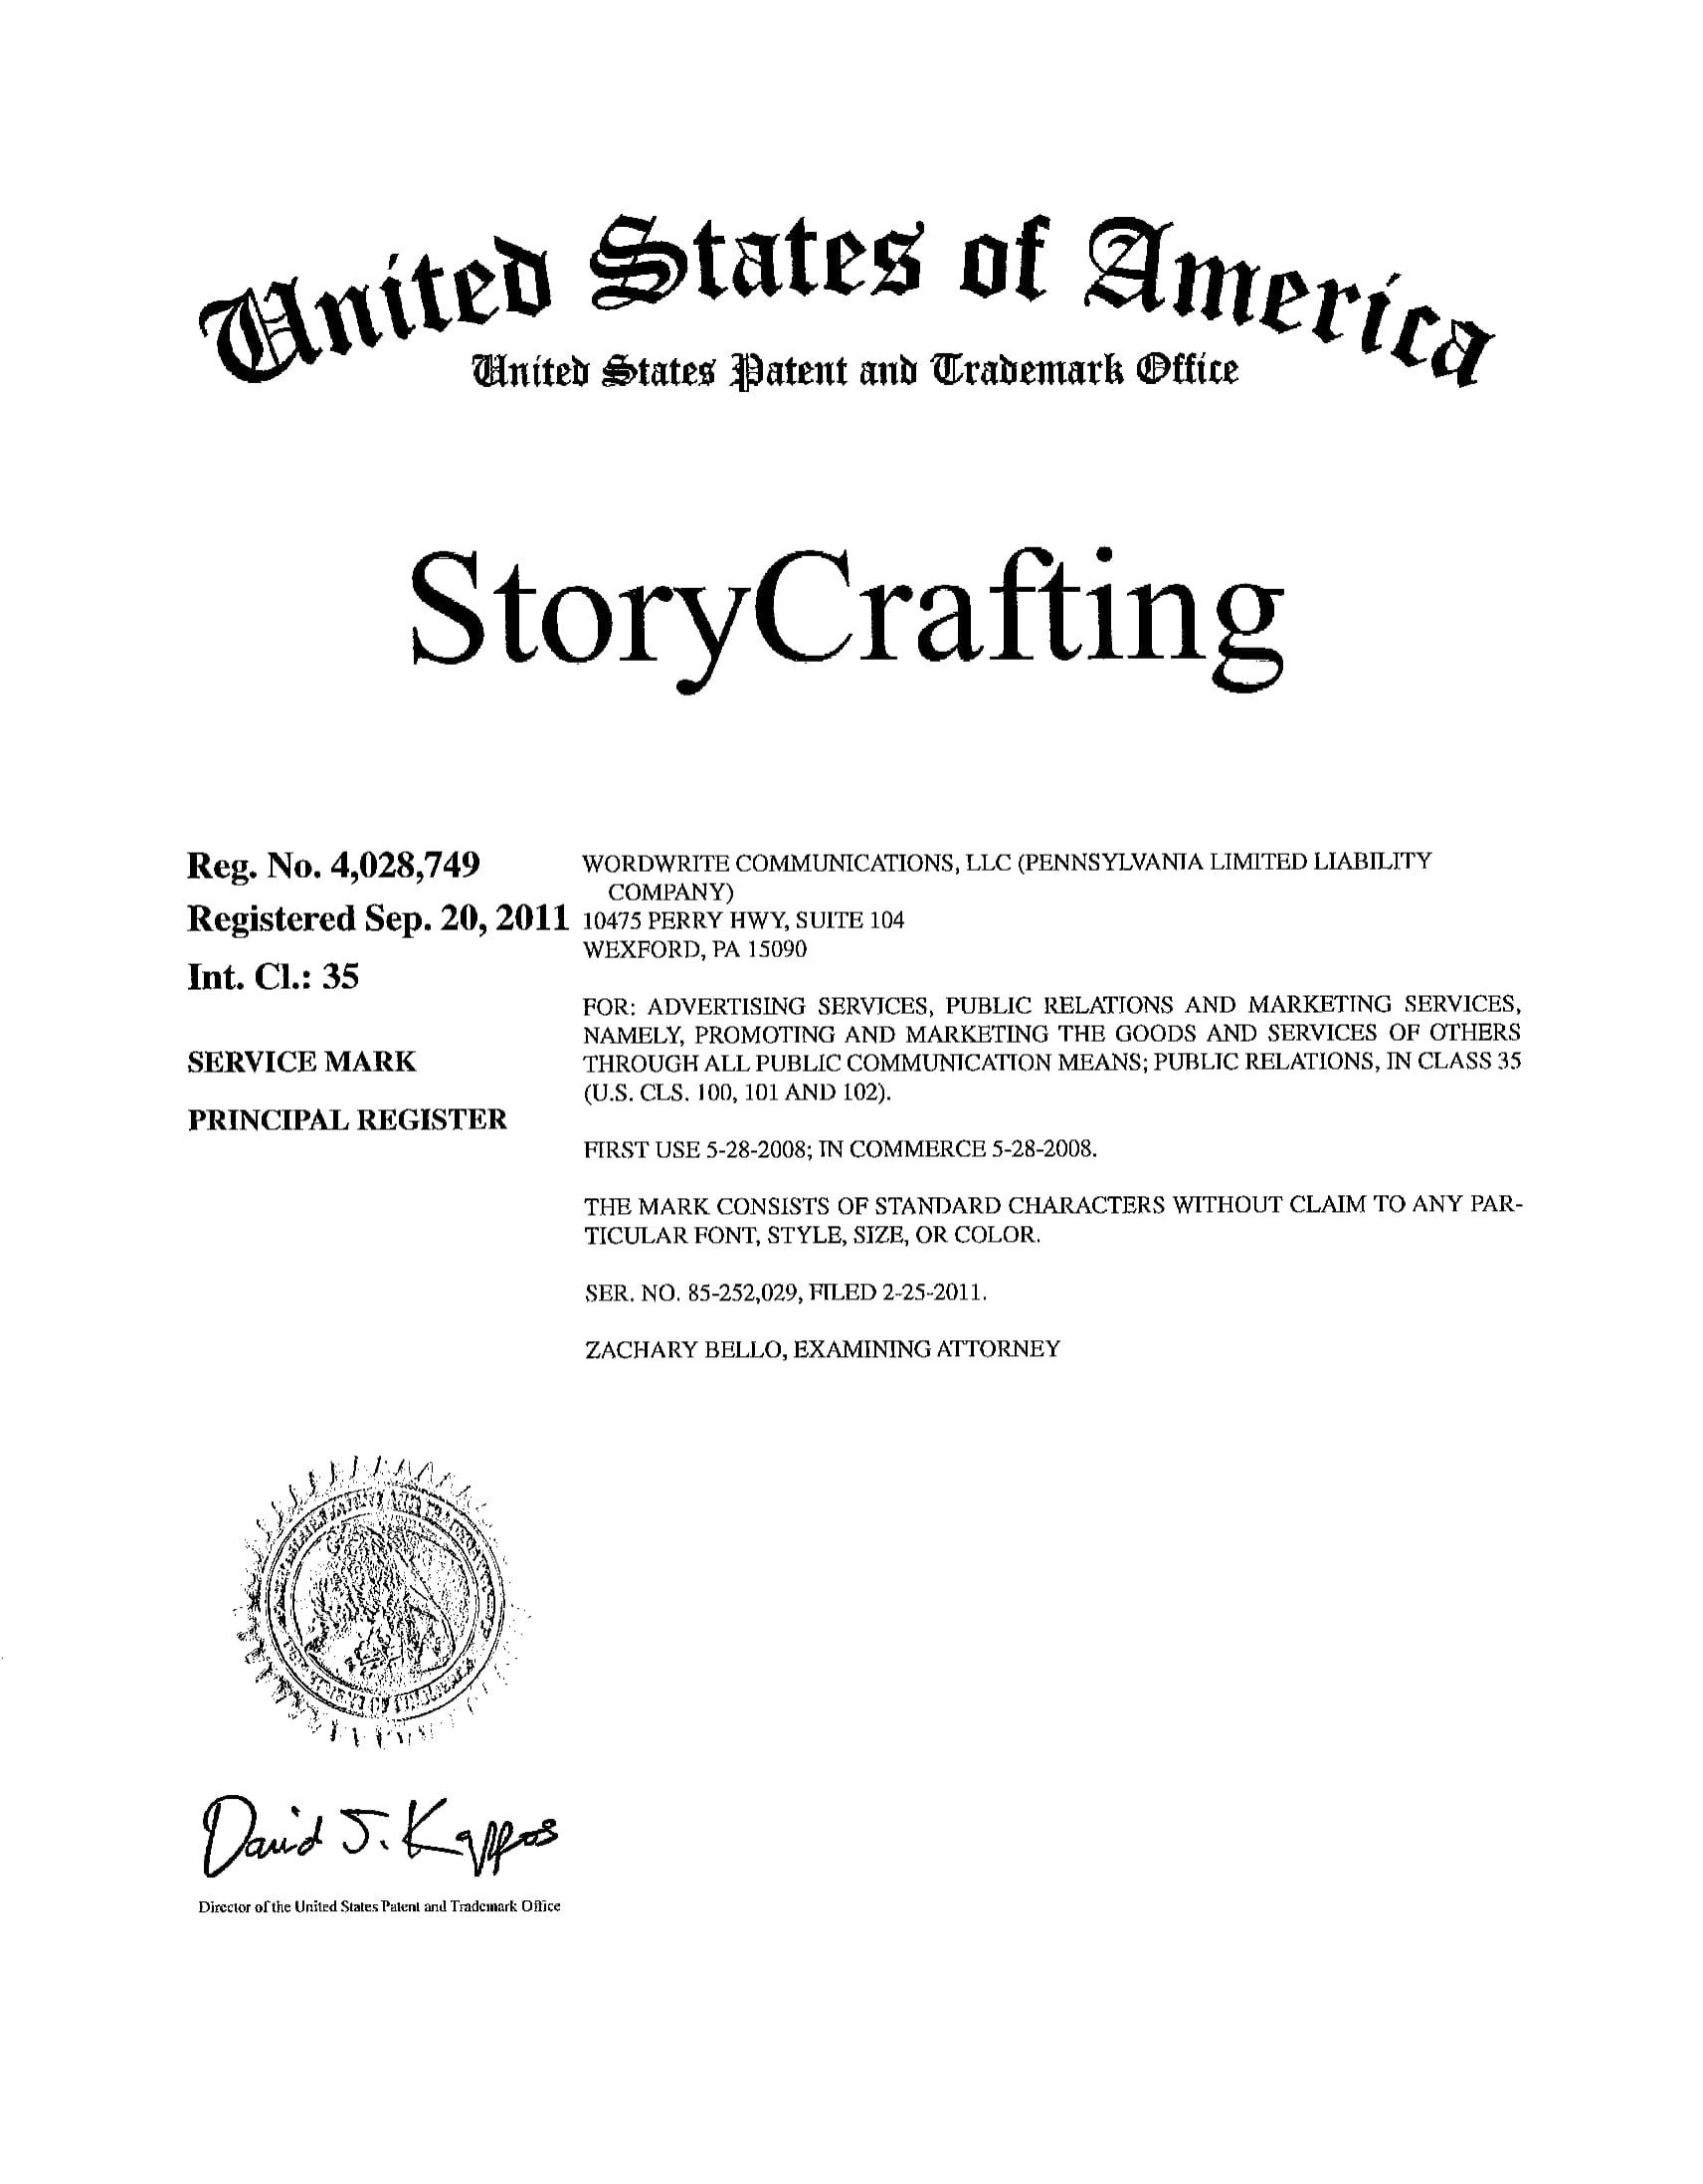 StoryCrafting_approval_USPTO-1